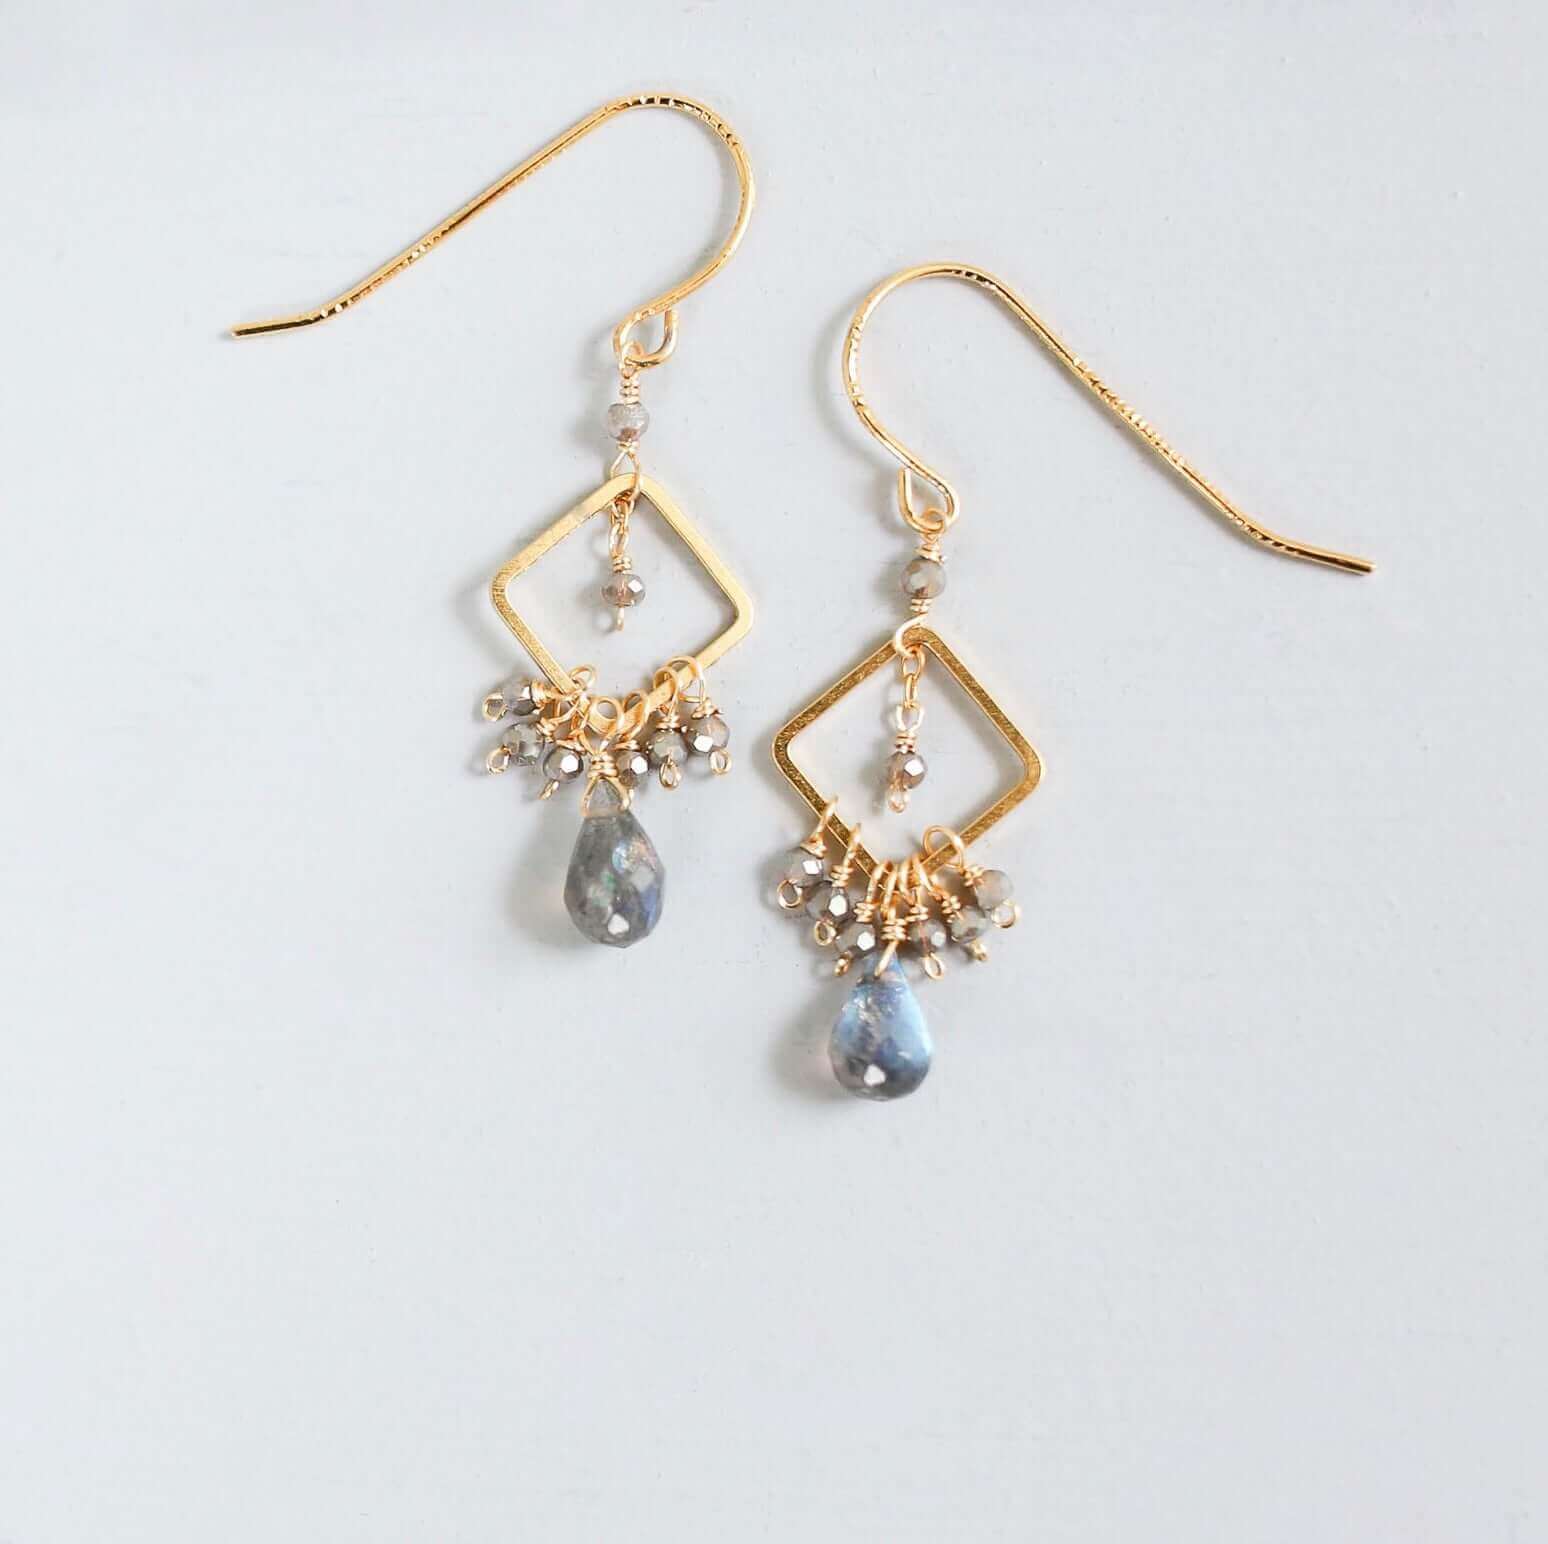 Labradorite gemstones French Hook Gold Earrings 